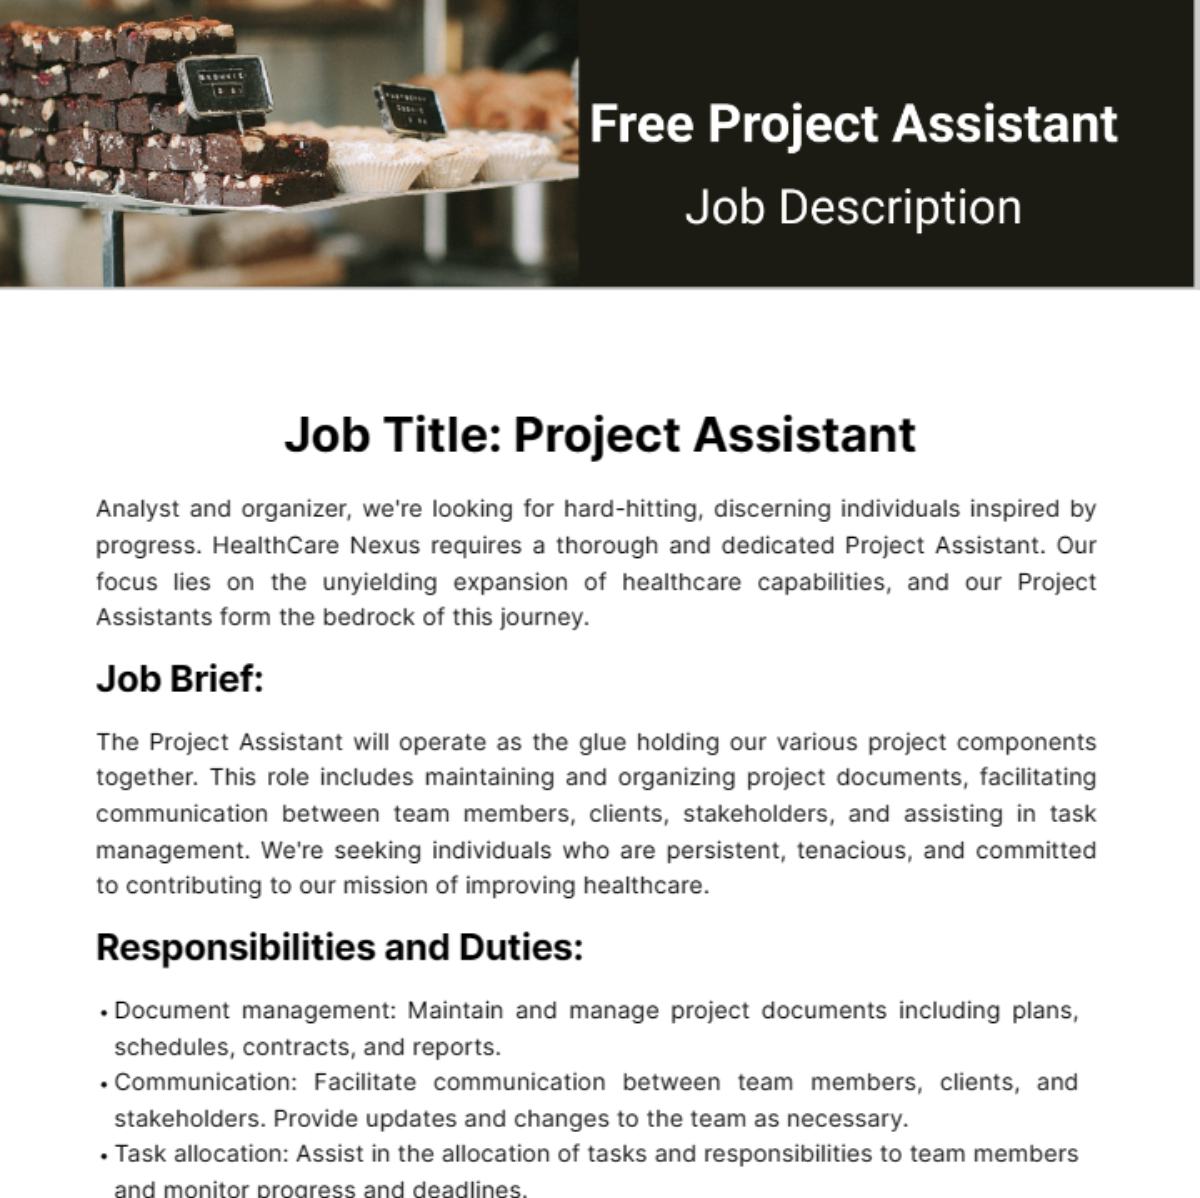 Free Project Assistant Job Description Template